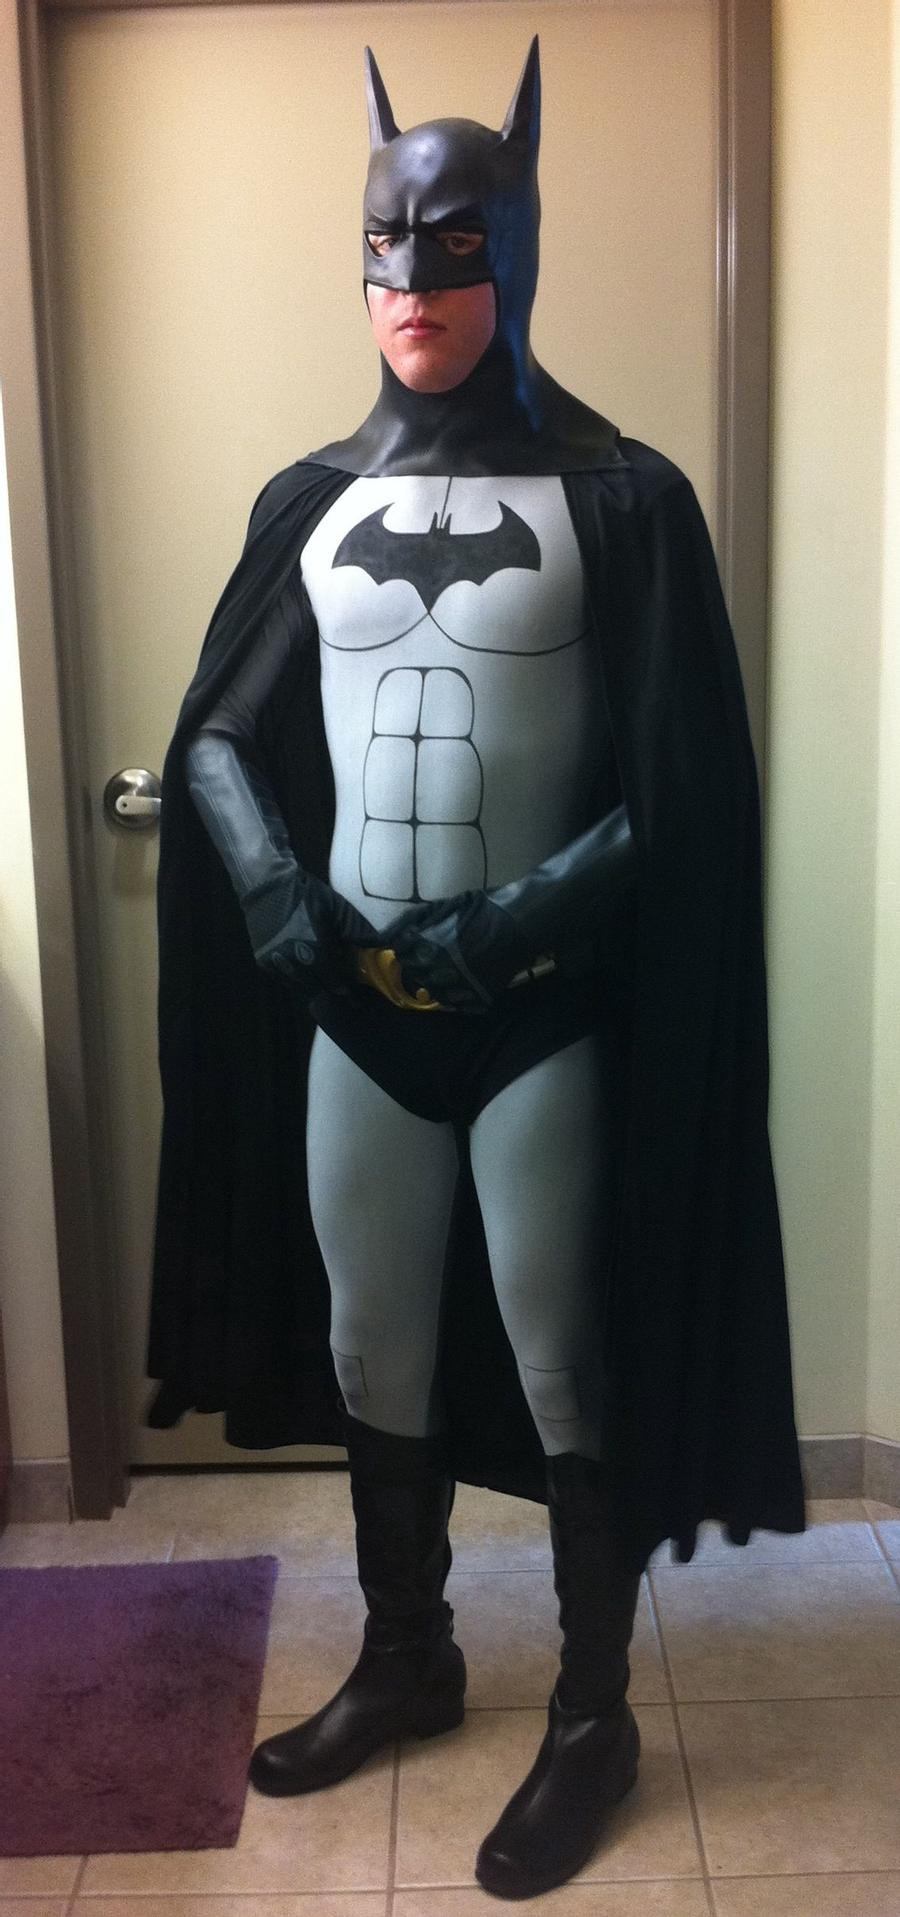 Batman Costume DIY
 My Homemade Batman Costume by Cjrowland on DeviantArt